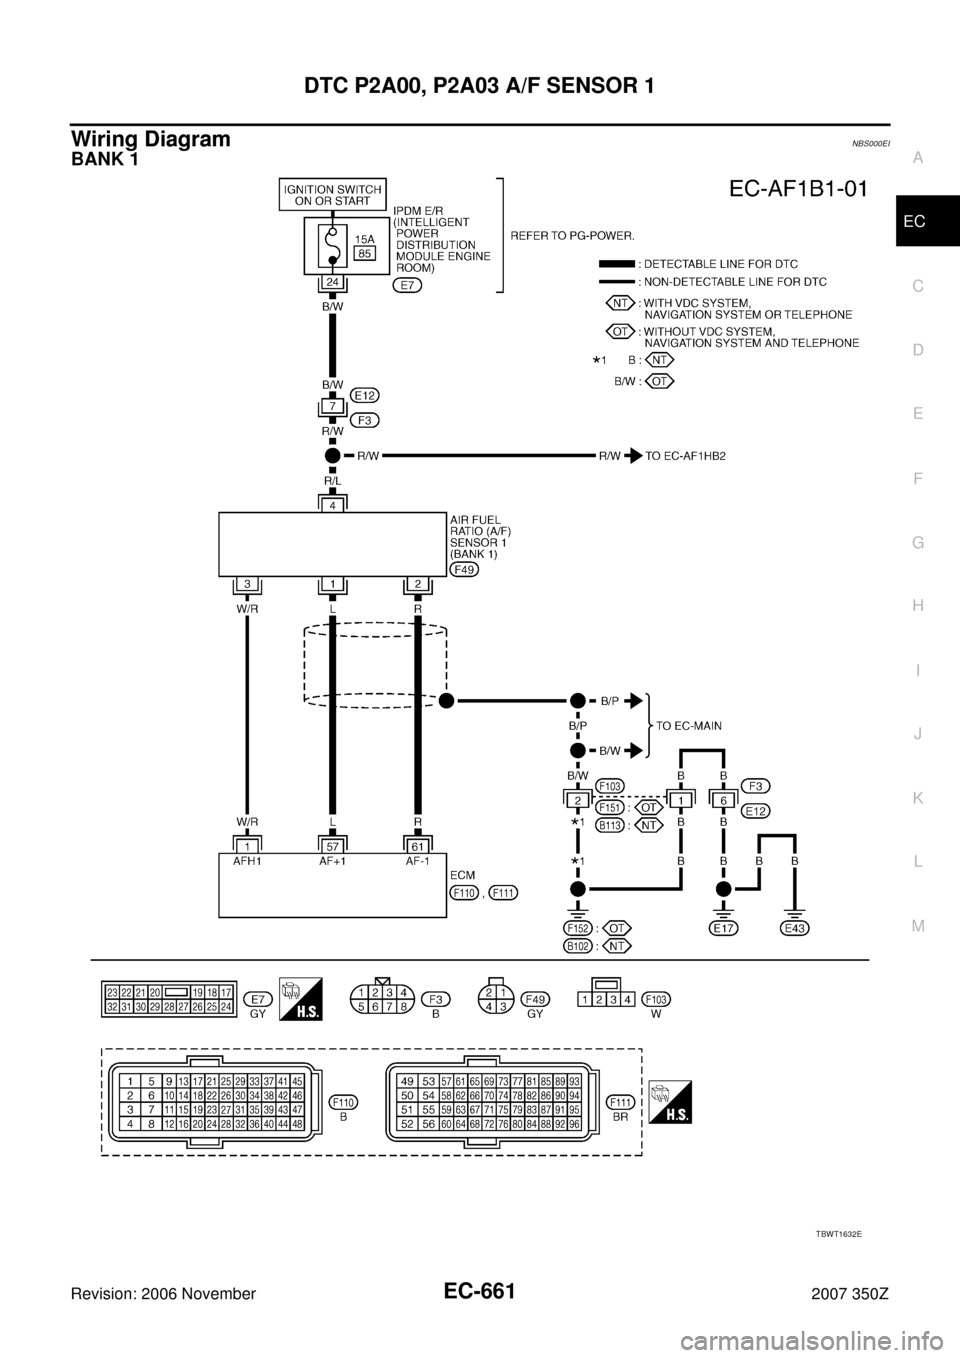 NISSAN 350Z 2007 Z33 Engine Control Workshop Manual DTC P2A00, P2A03 A/F SENSOR 1
EC-661
C
D
E
F
G
H
I
J
K
L
MA
EC
Revision: 2006 November2007 350Z
Wiring Diagram NBS000EI
BANK 1
TBWT1632E 